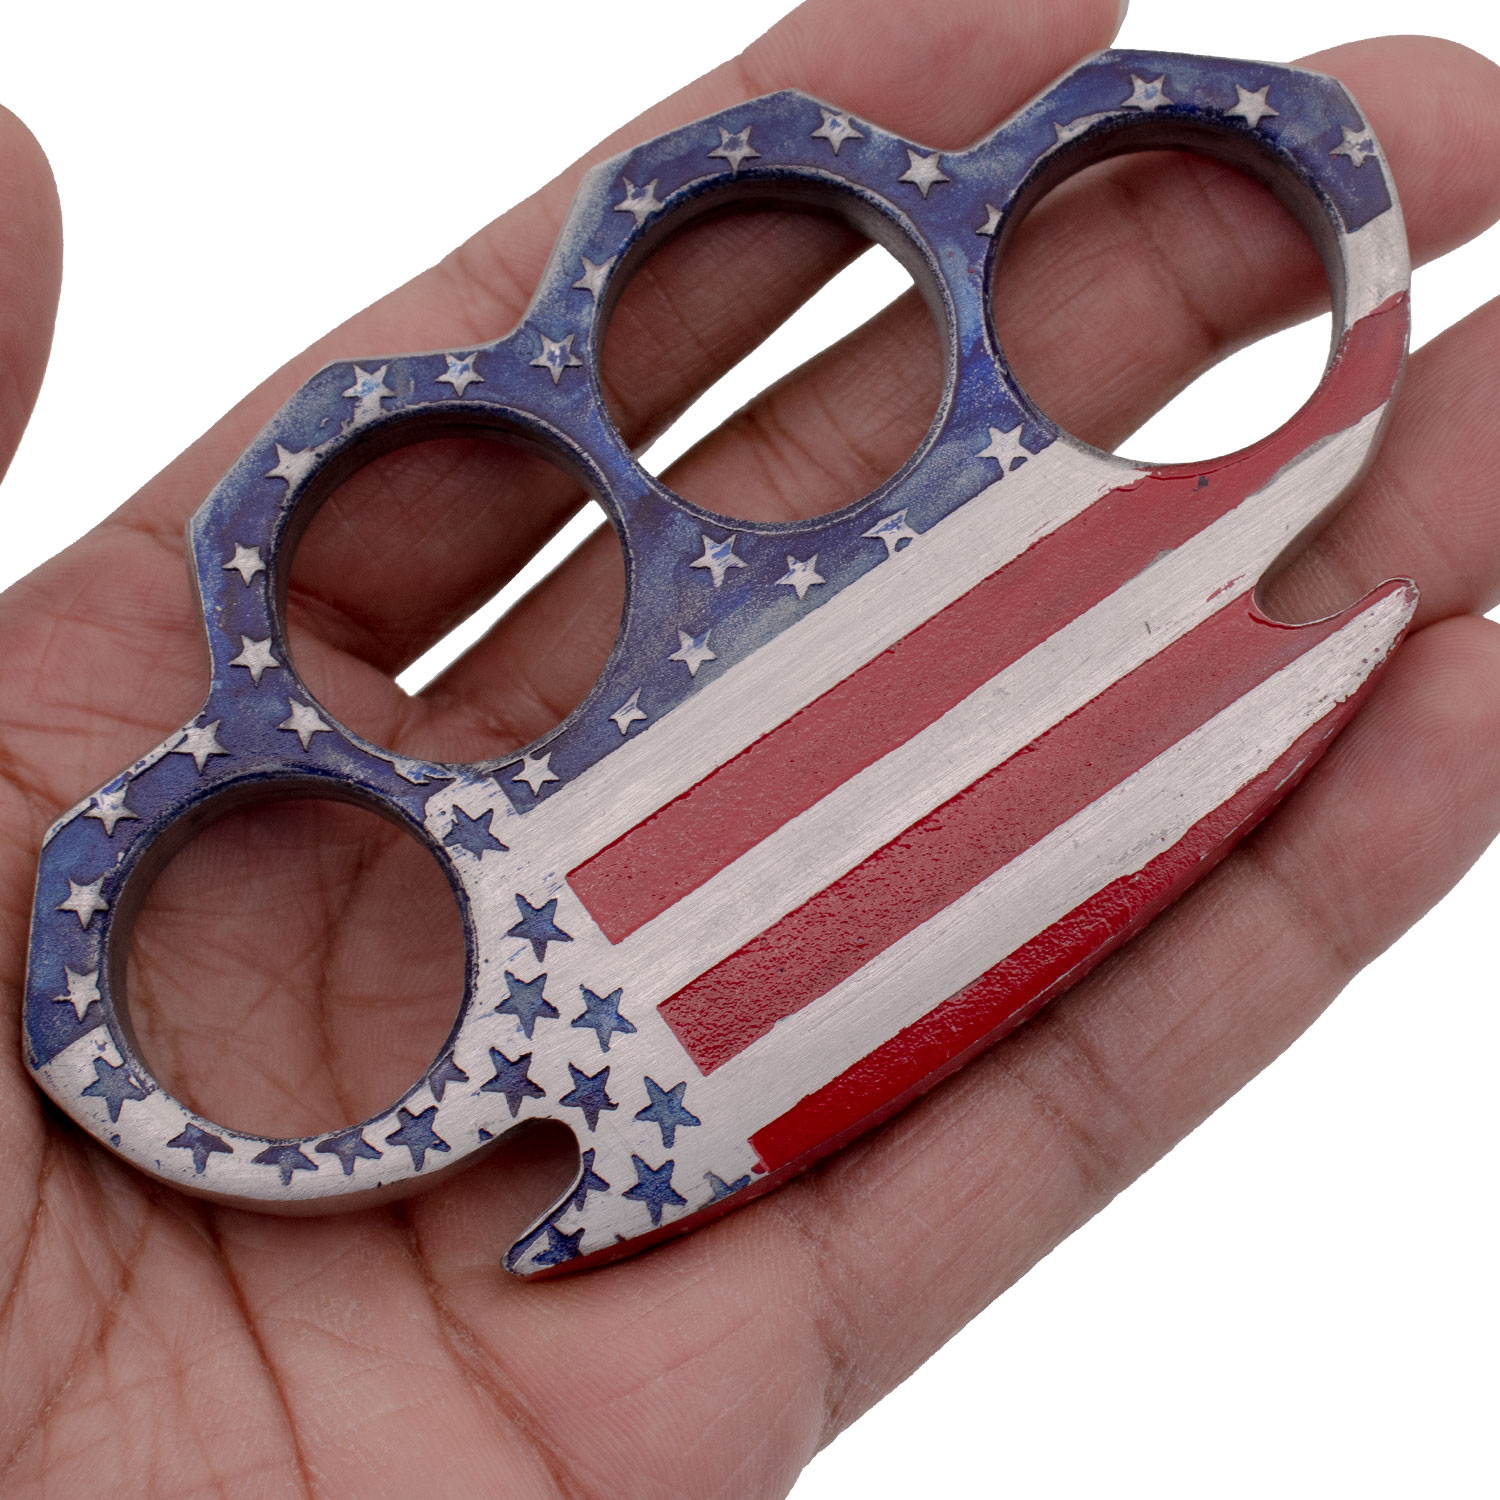 USA USA USA Heavy Duty Brass Knuckle Paperweight